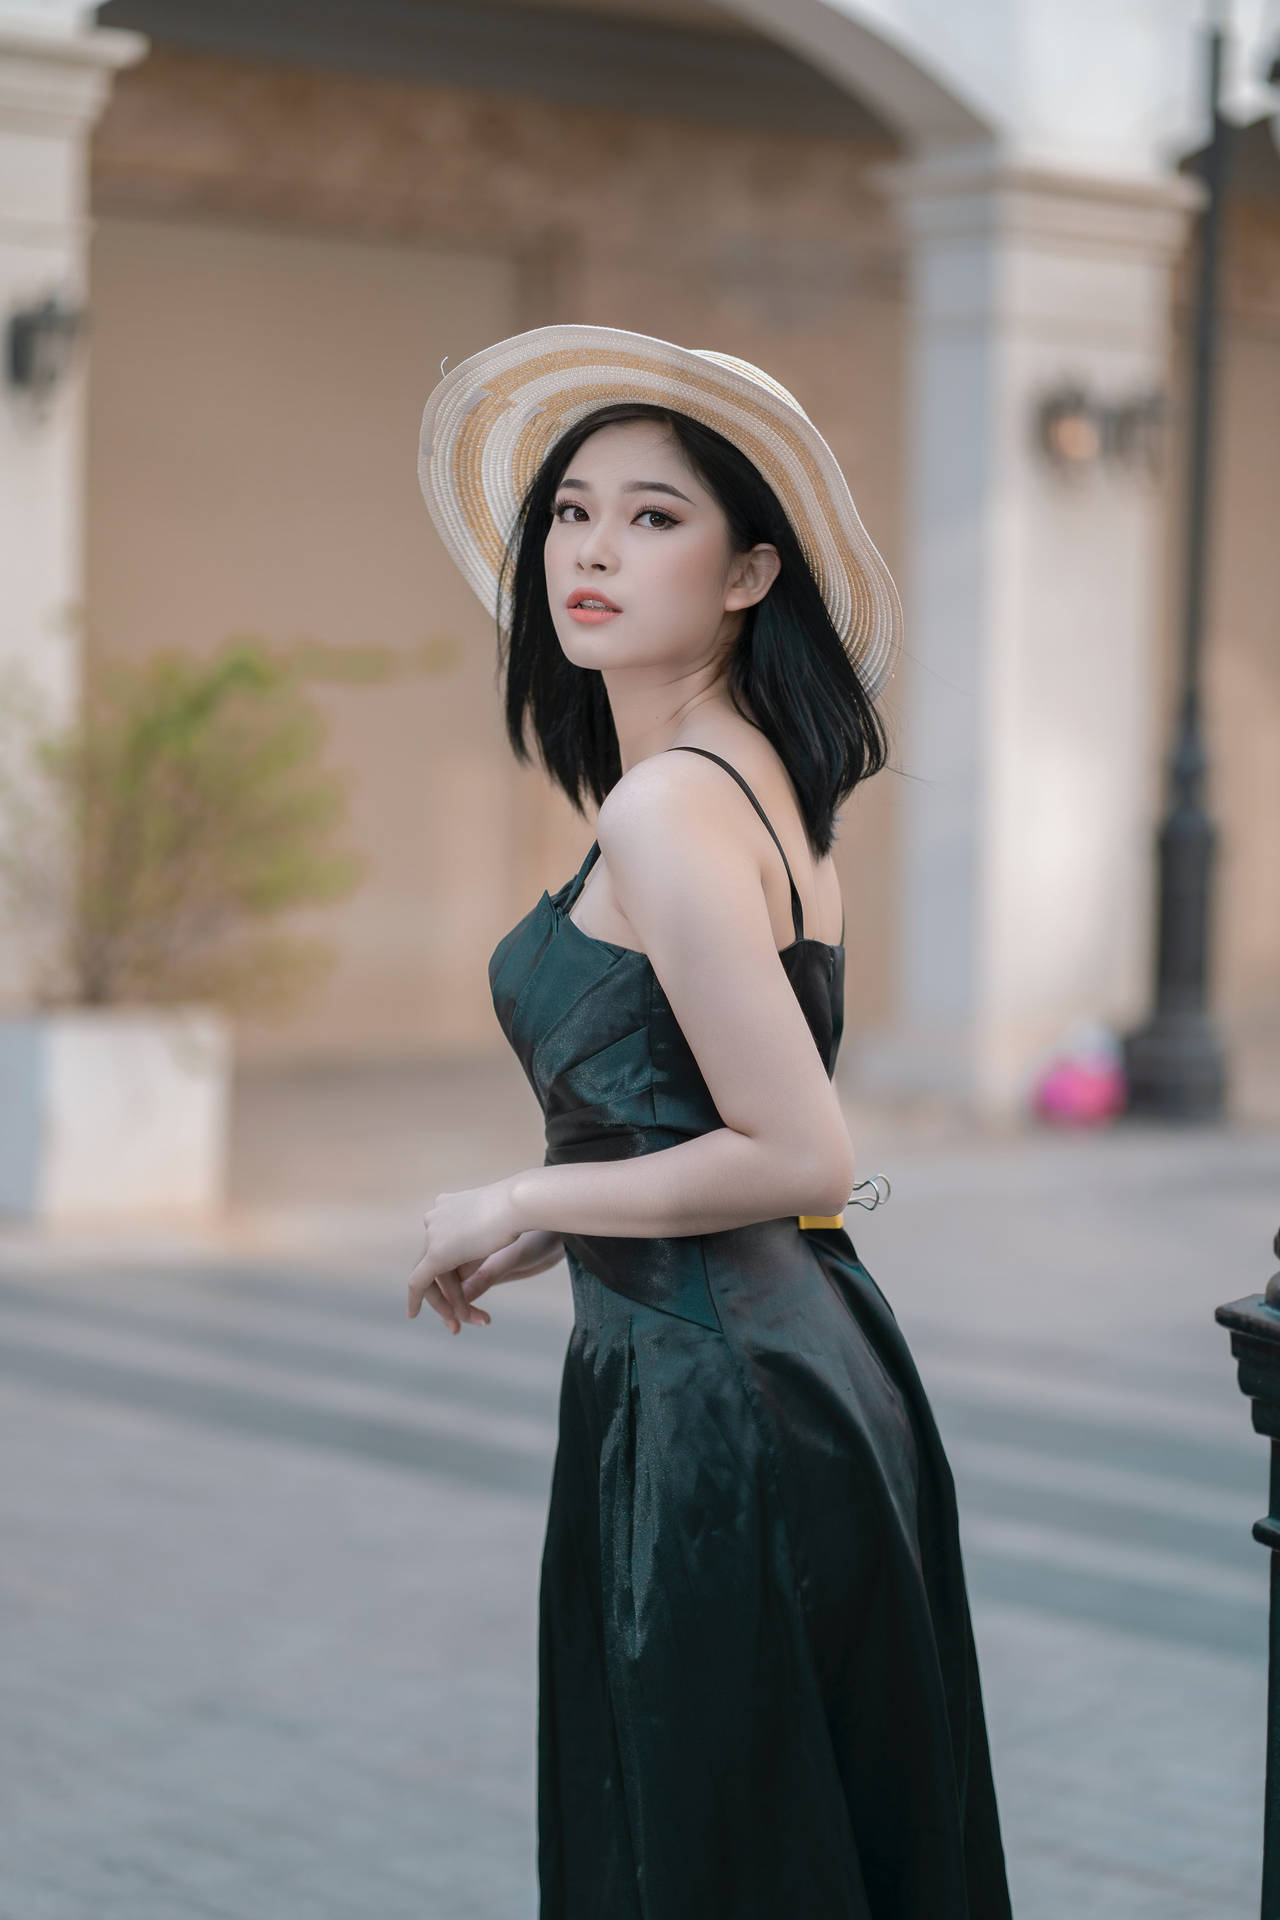 Asian Woman Wearing Elegant Green Dress Background